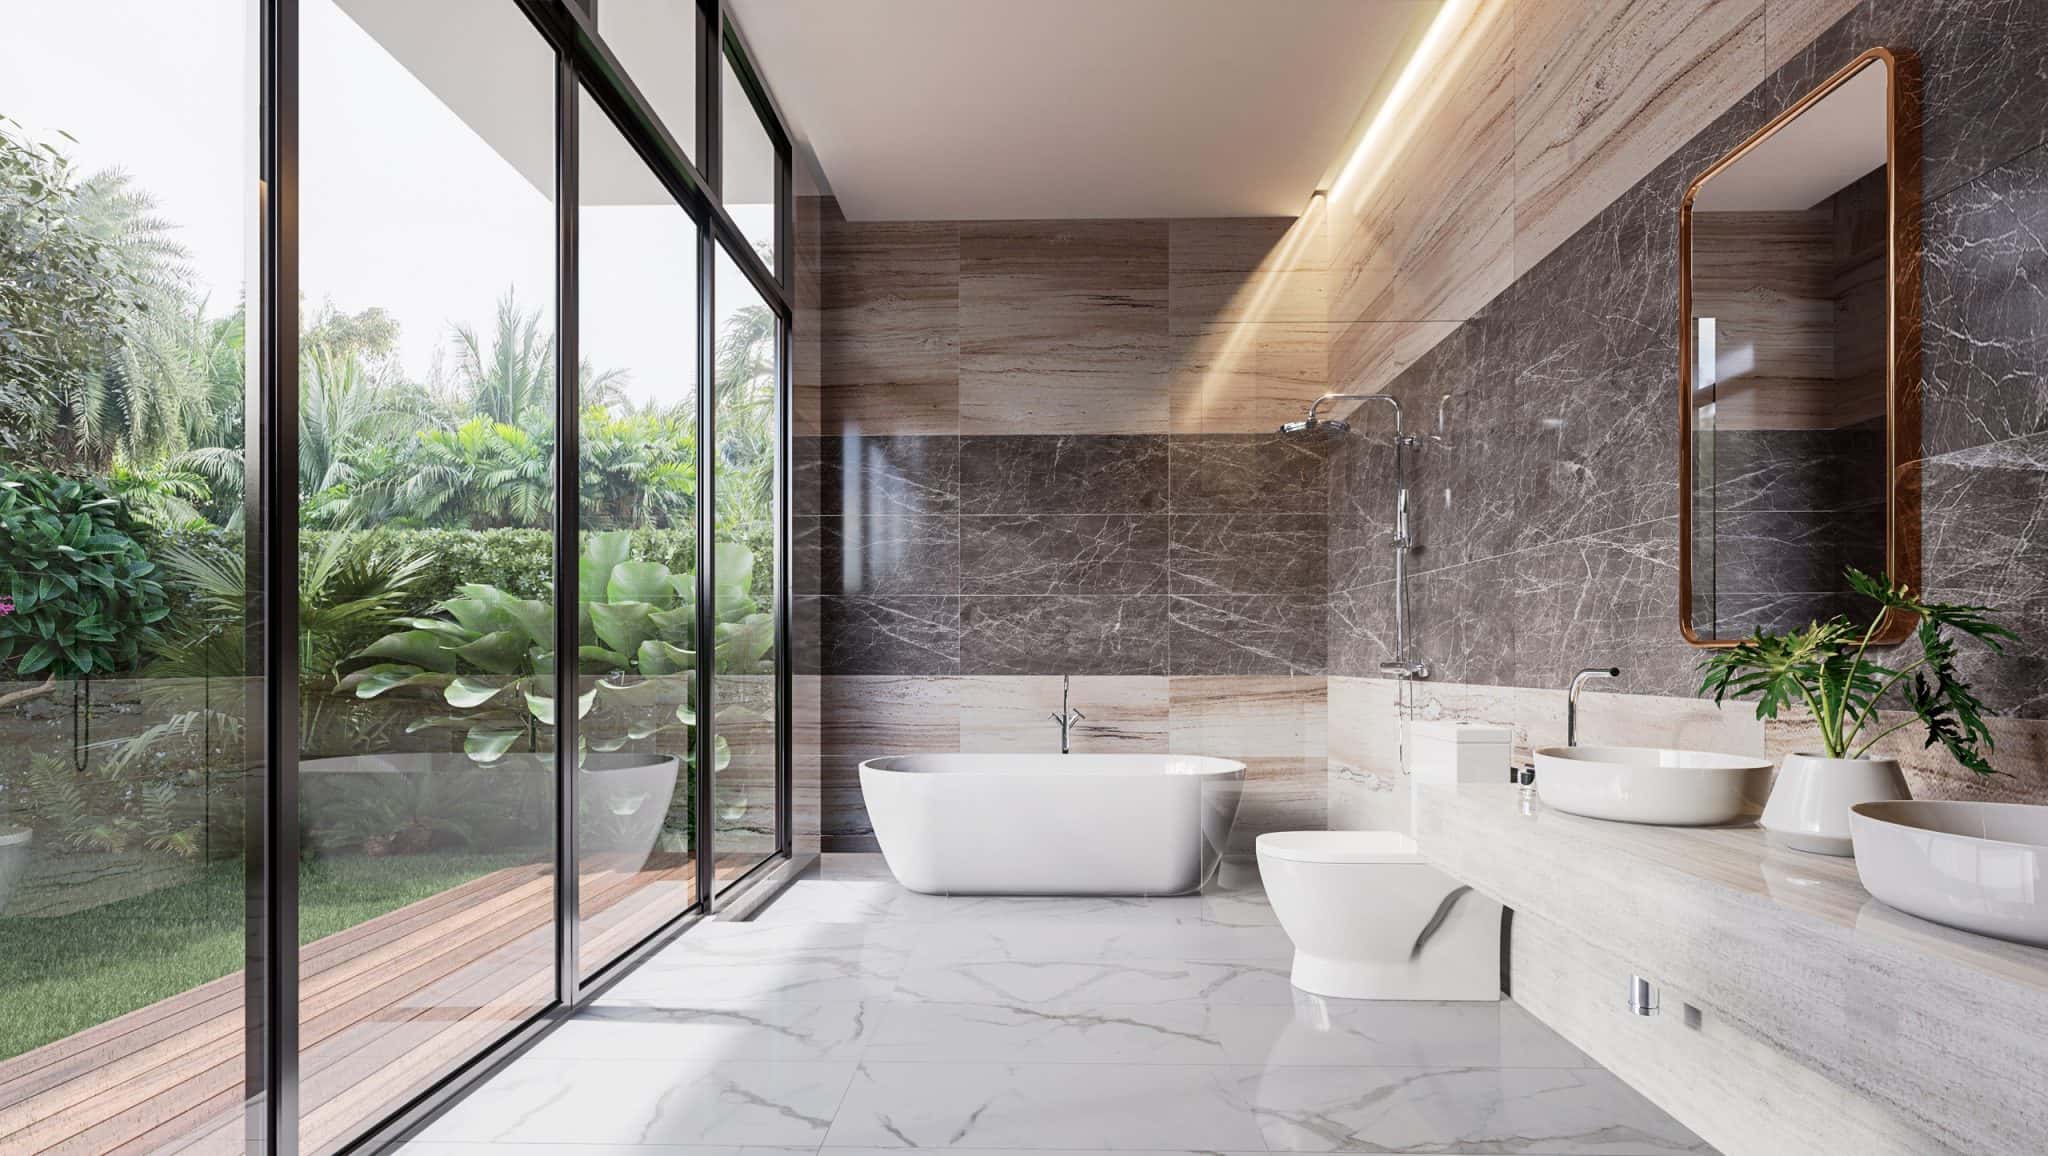 https://www.shutterstock.com/image-illustration/modern-luxury-bathroom-tropical-style-garden-2033524334